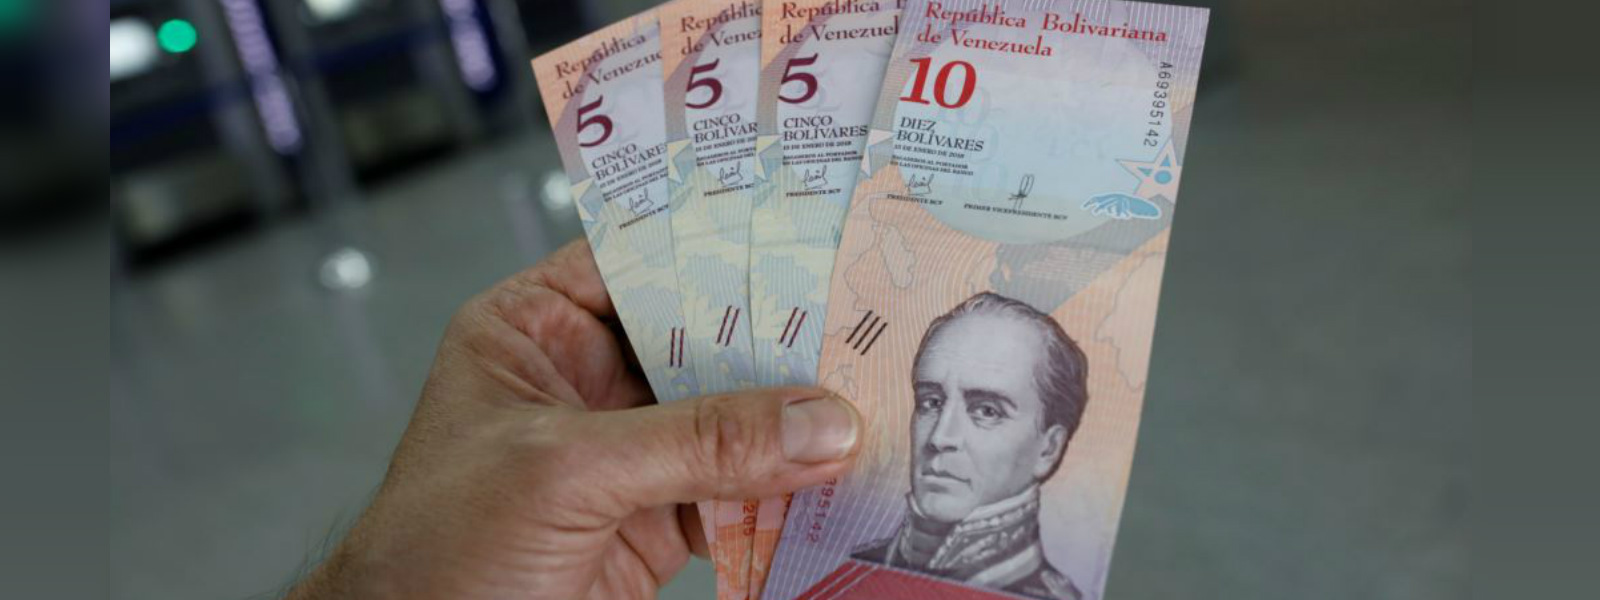 Inflation soaring, Venezuela prices shed five 0's 